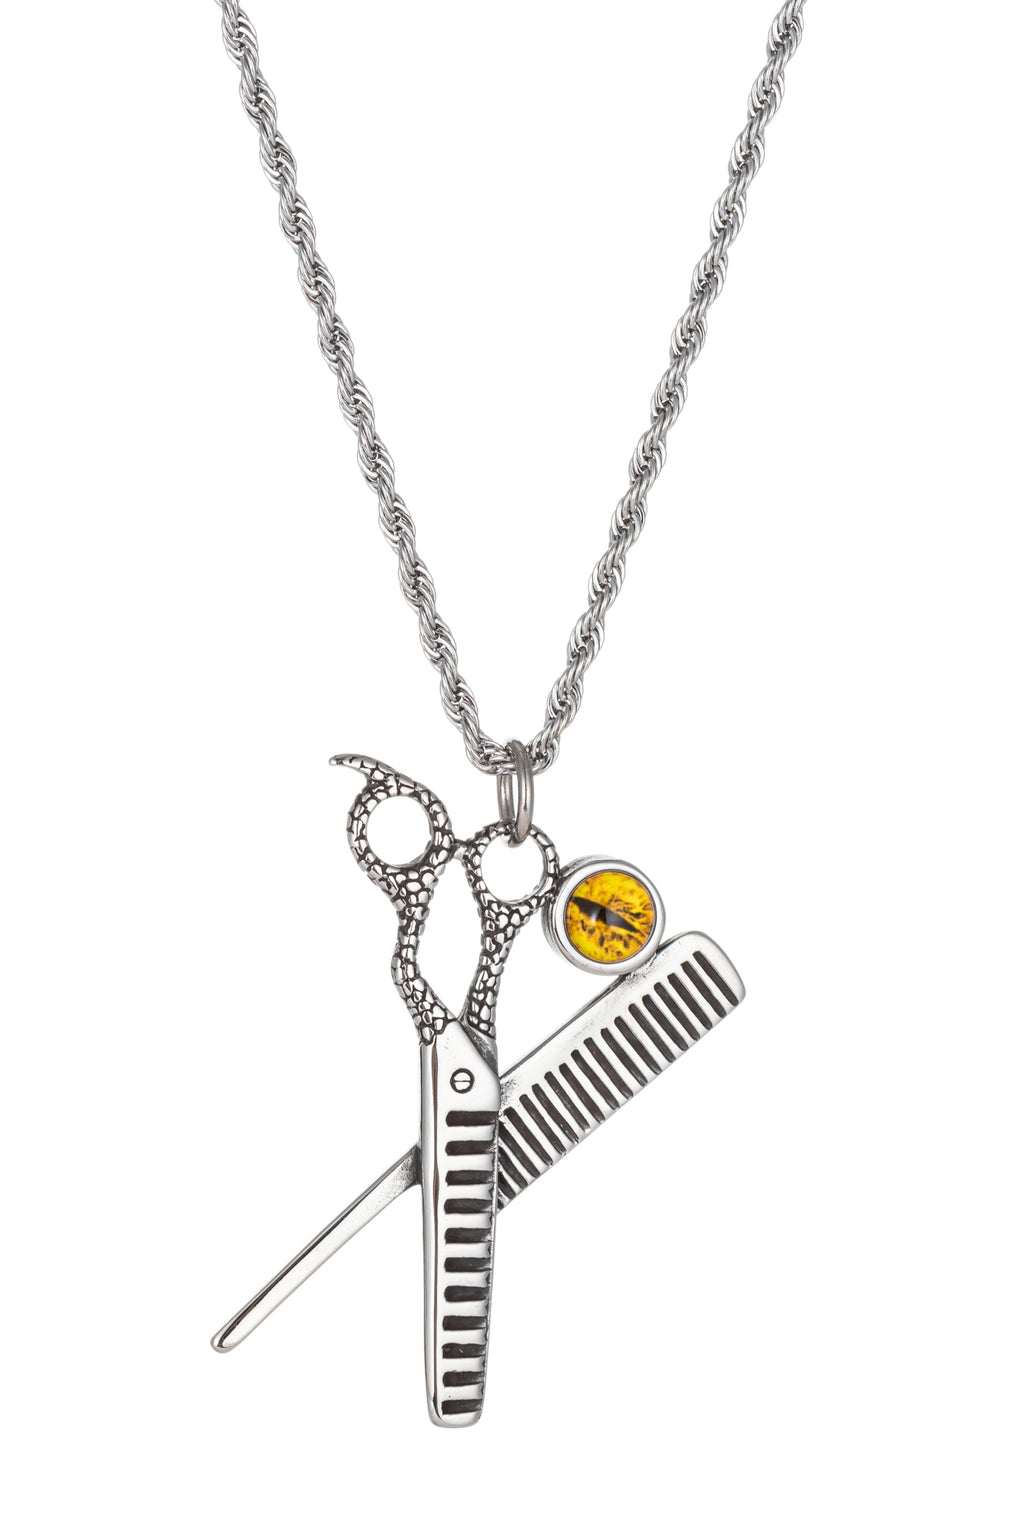 Silver scissor and comb pendant necklace.